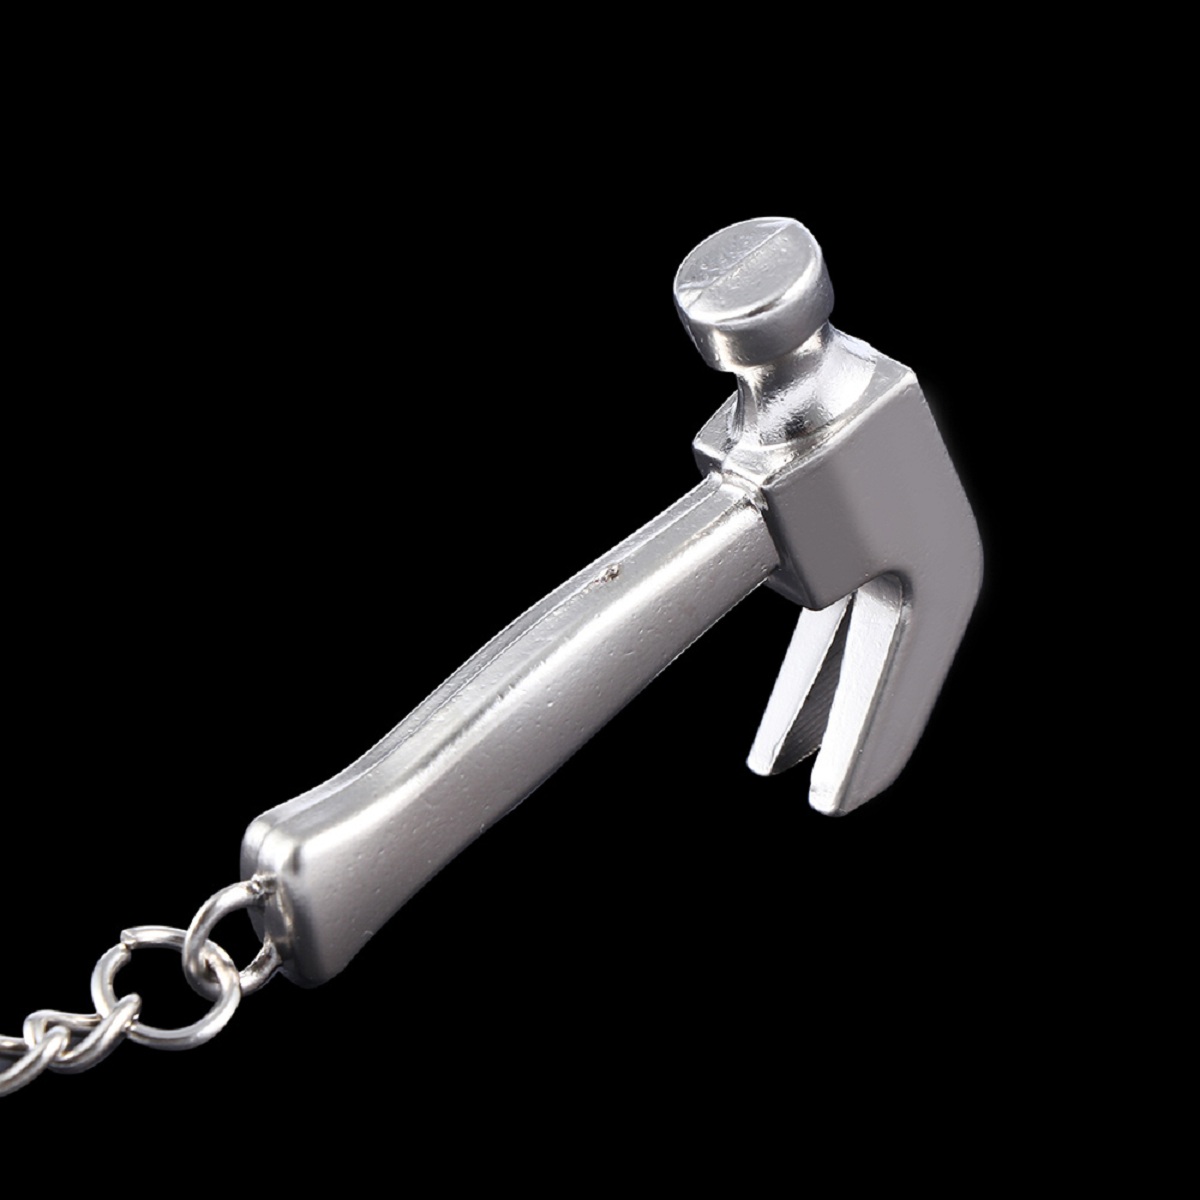 Mini-Tool-Corner-Hammer-Tool-Keychain-High-Quality-Alloy-Creative-Tools-Keychains-1550701